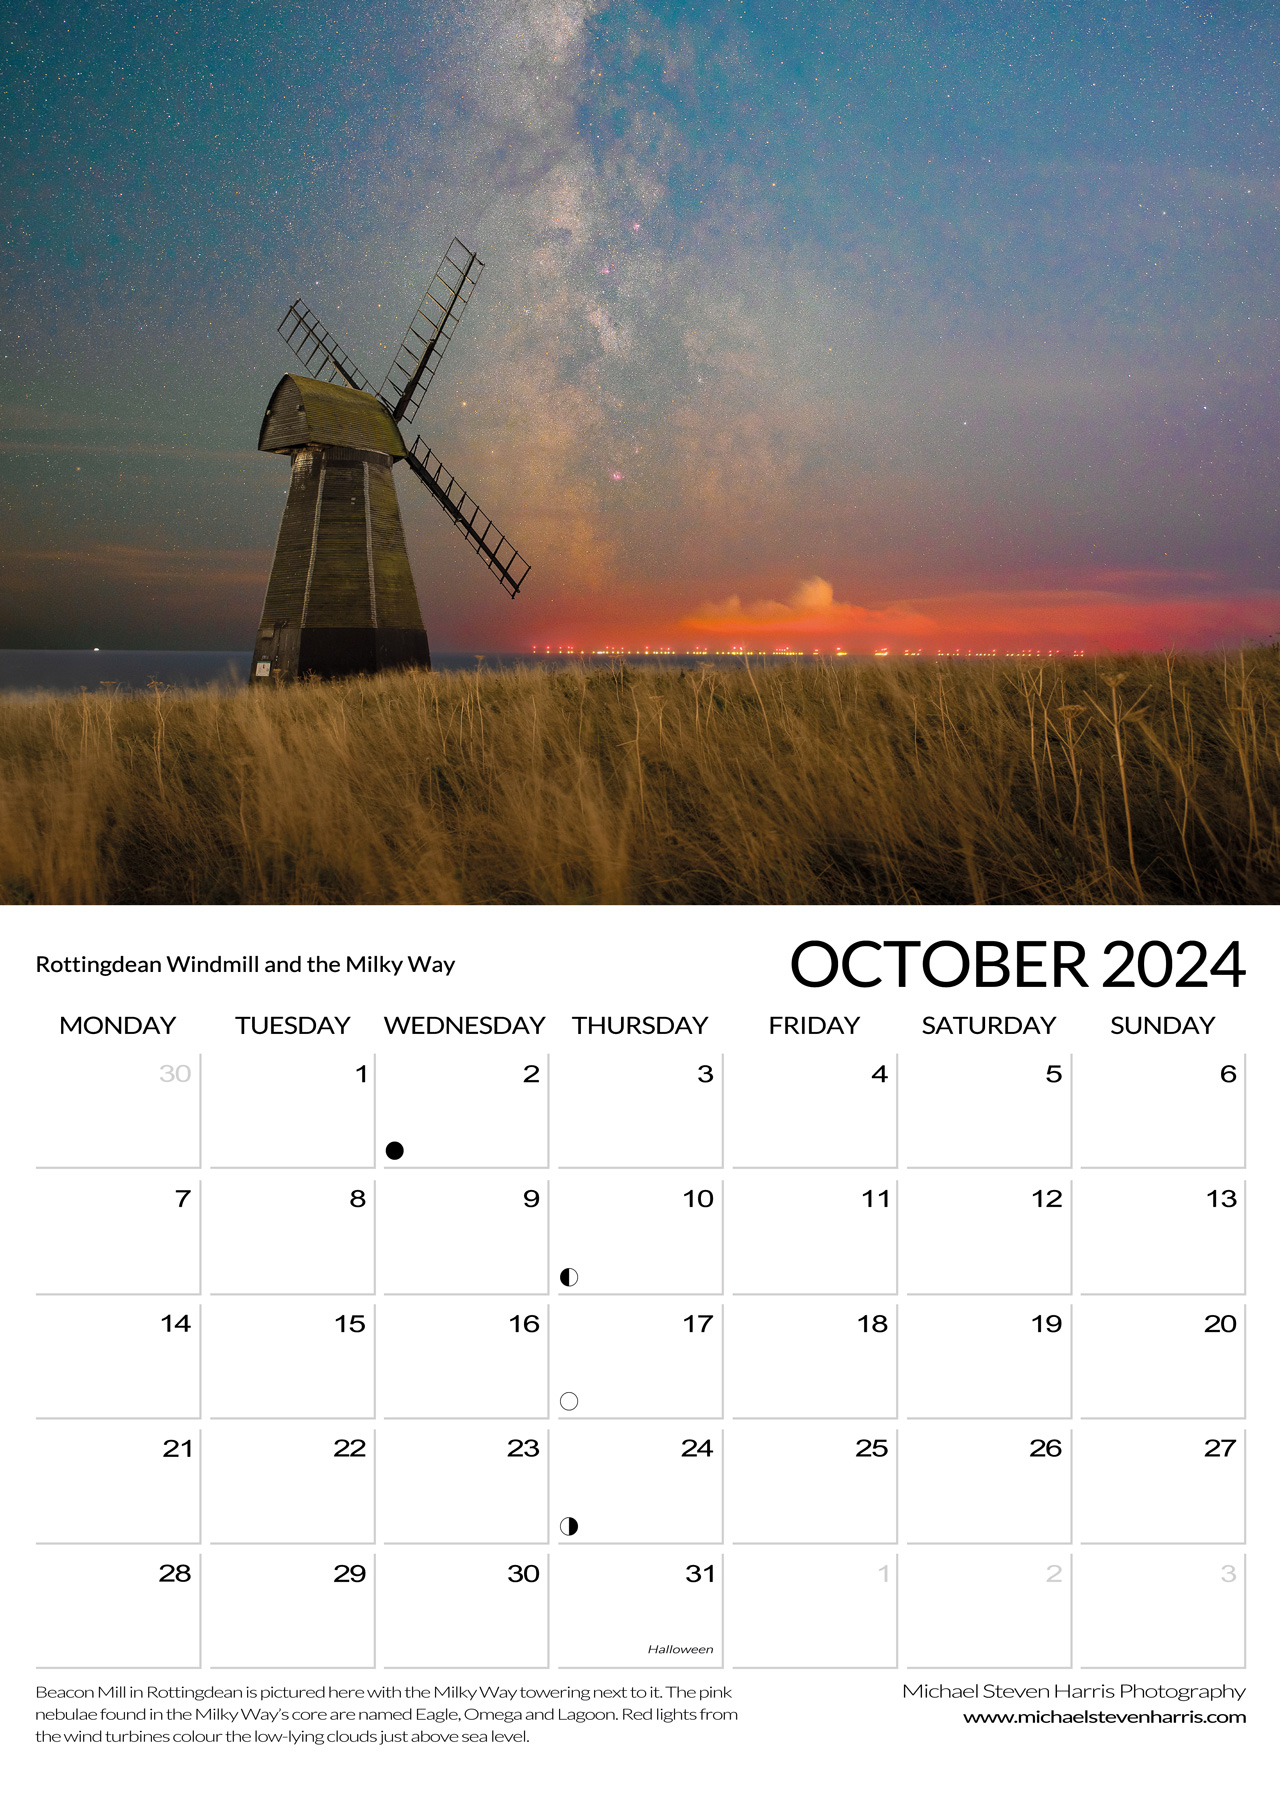 Brighton Calendar 2024 - by Night and Day!